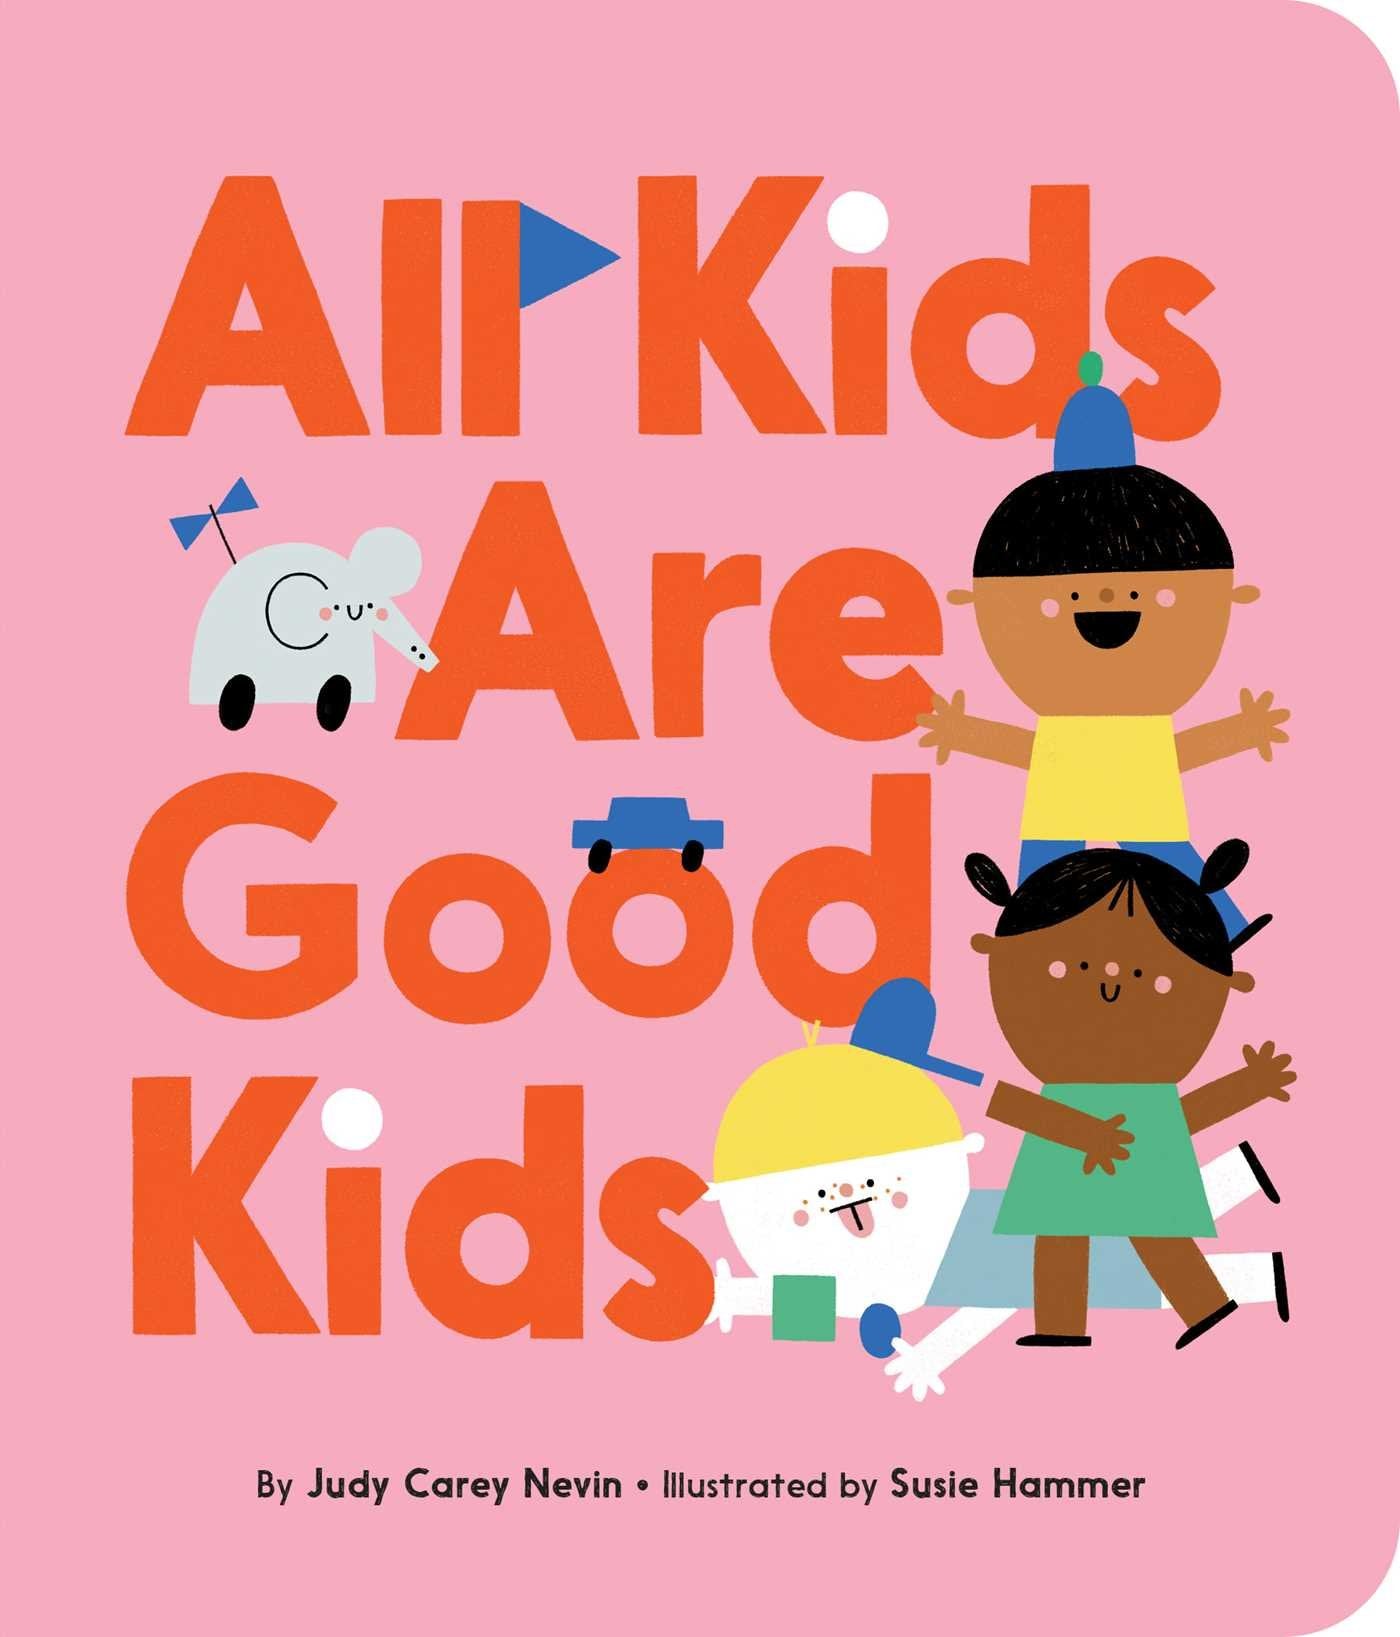 All Kids Are Good Kids Judy Carey Nevin